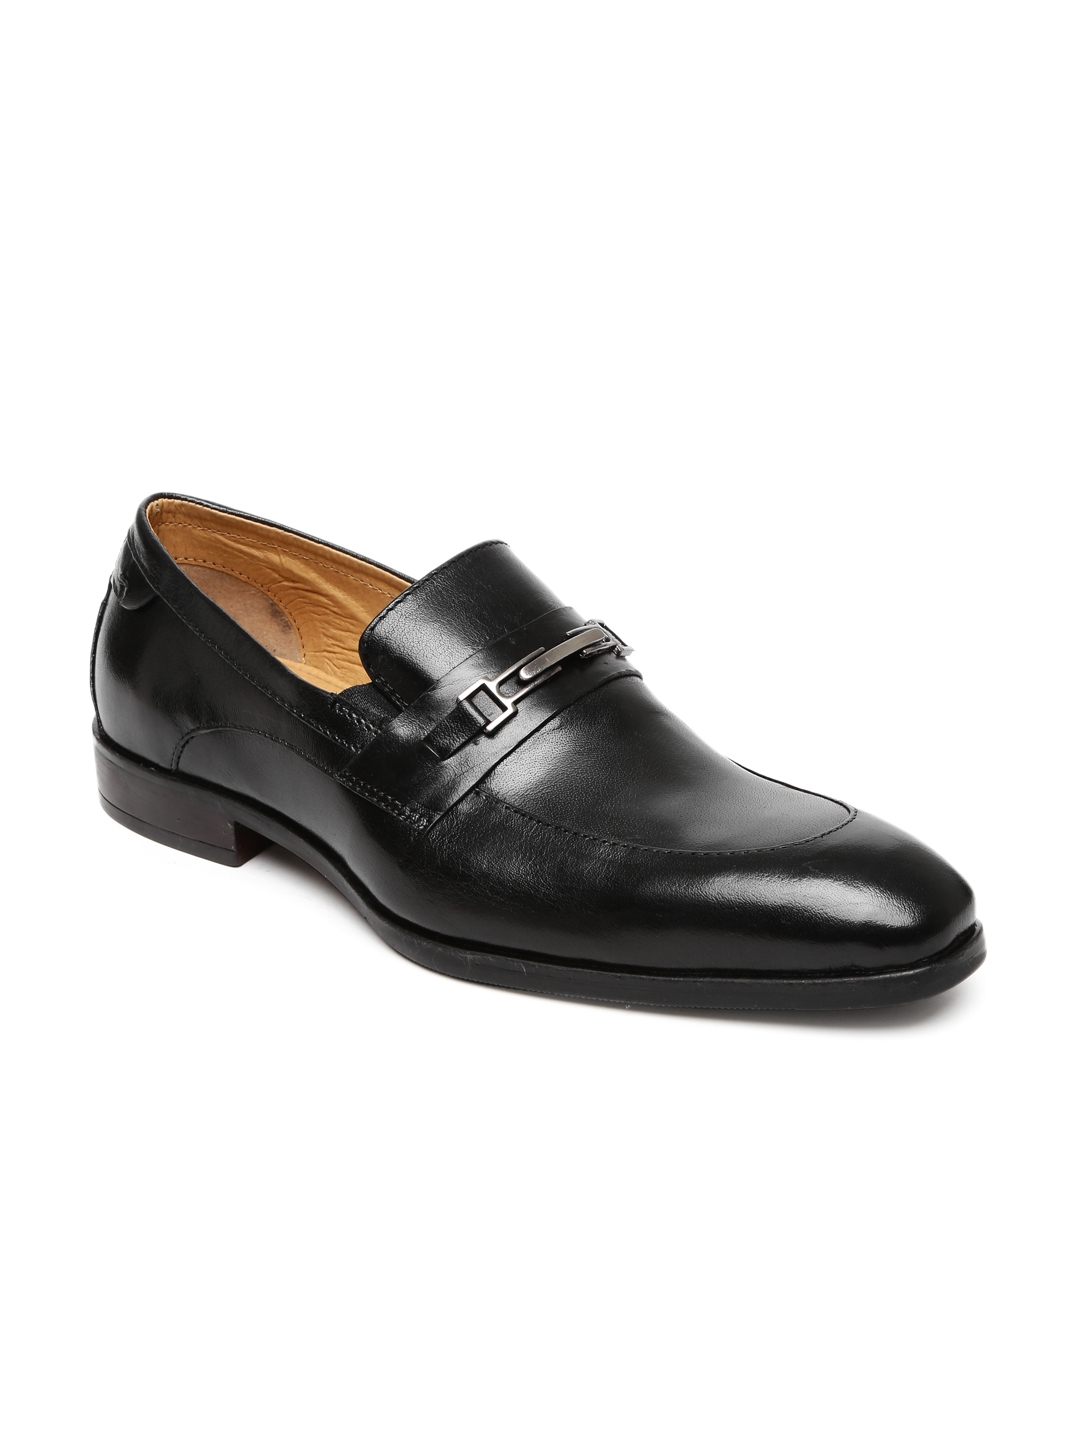 Buy Alberto Torresi Men Black Leather Semi Formal Slip On Shoes ...